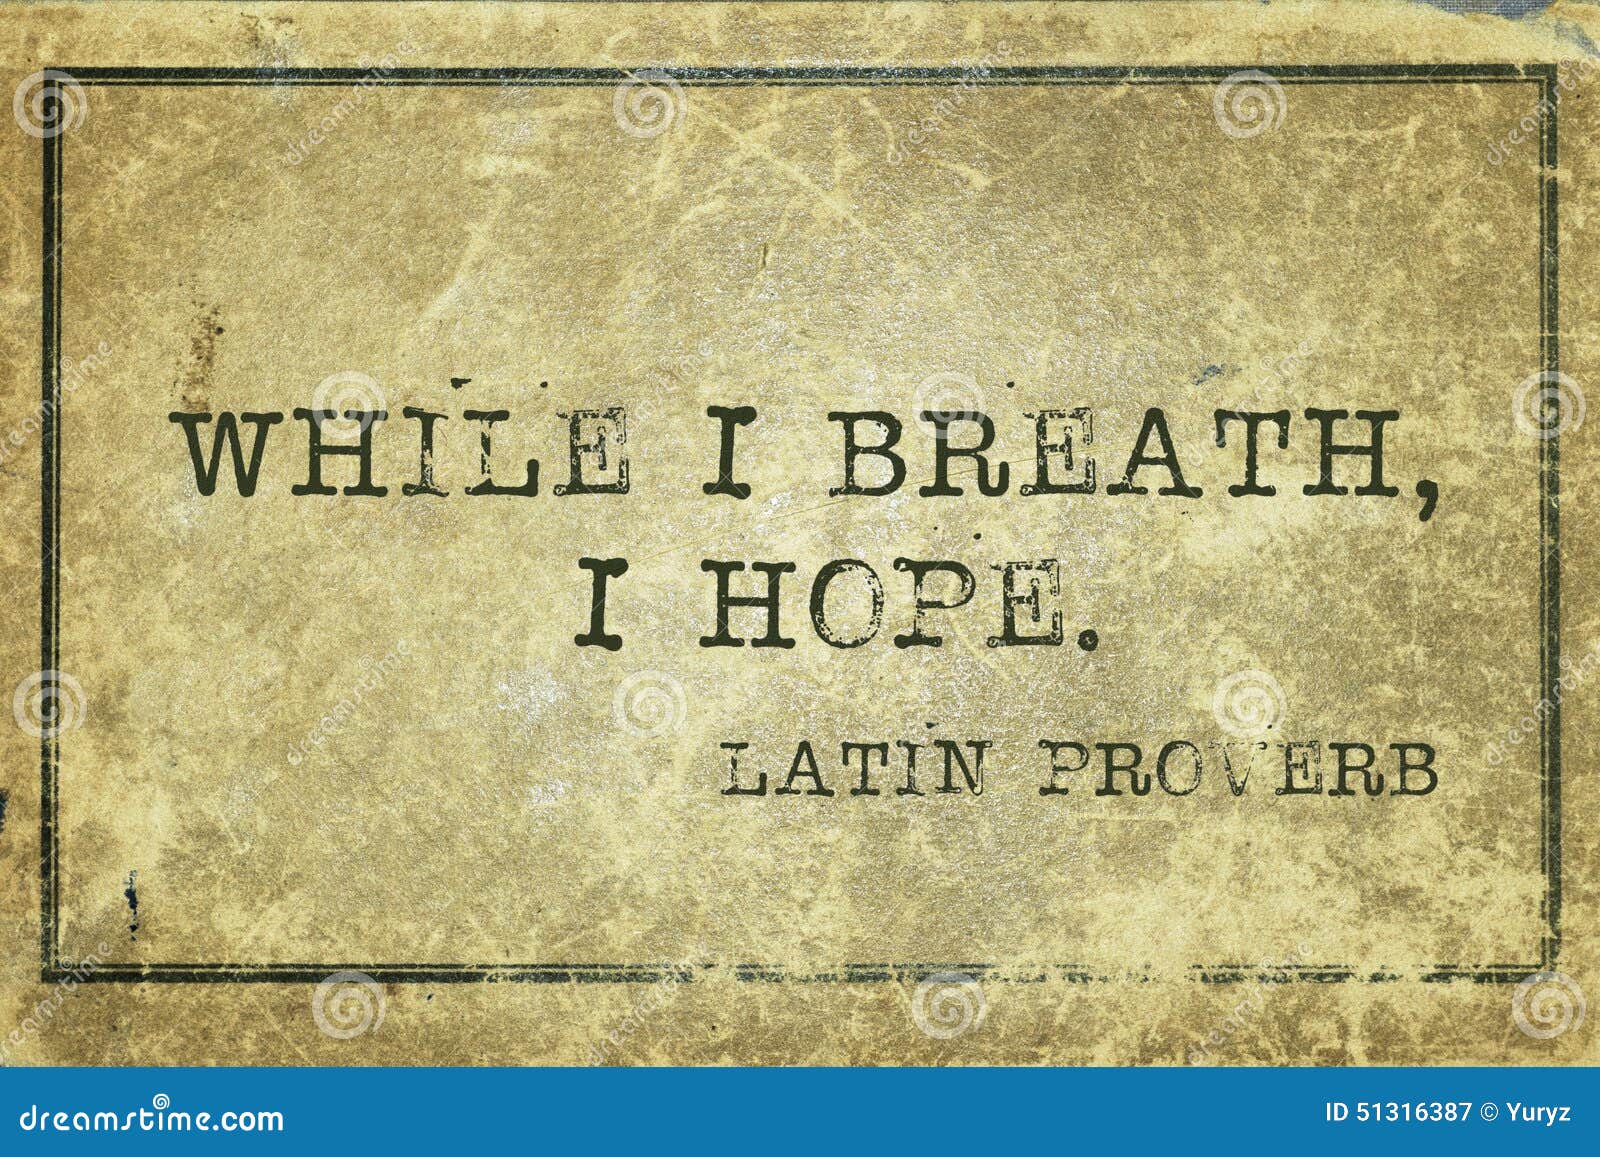 hope breath proverb